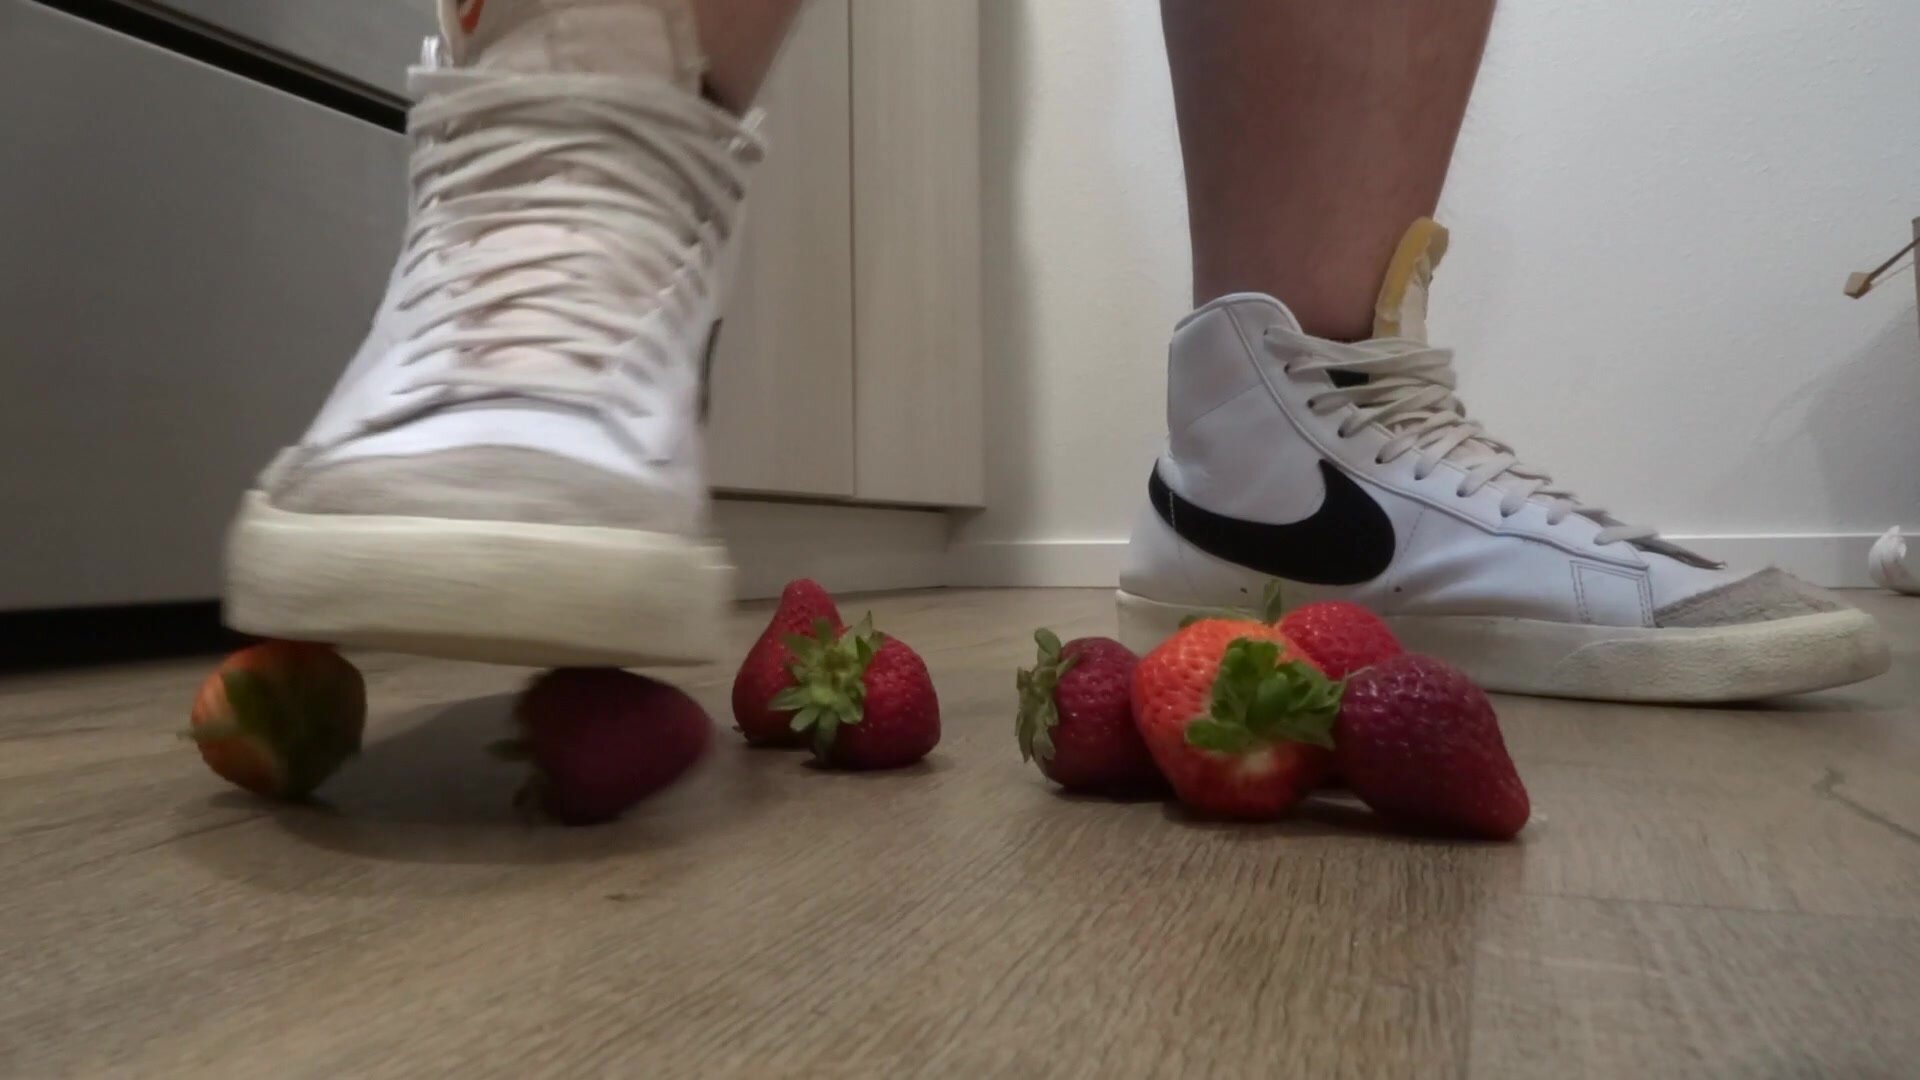 Blazer Full Hd - Nike Blazer Smash Strawberries - ThisVid.com